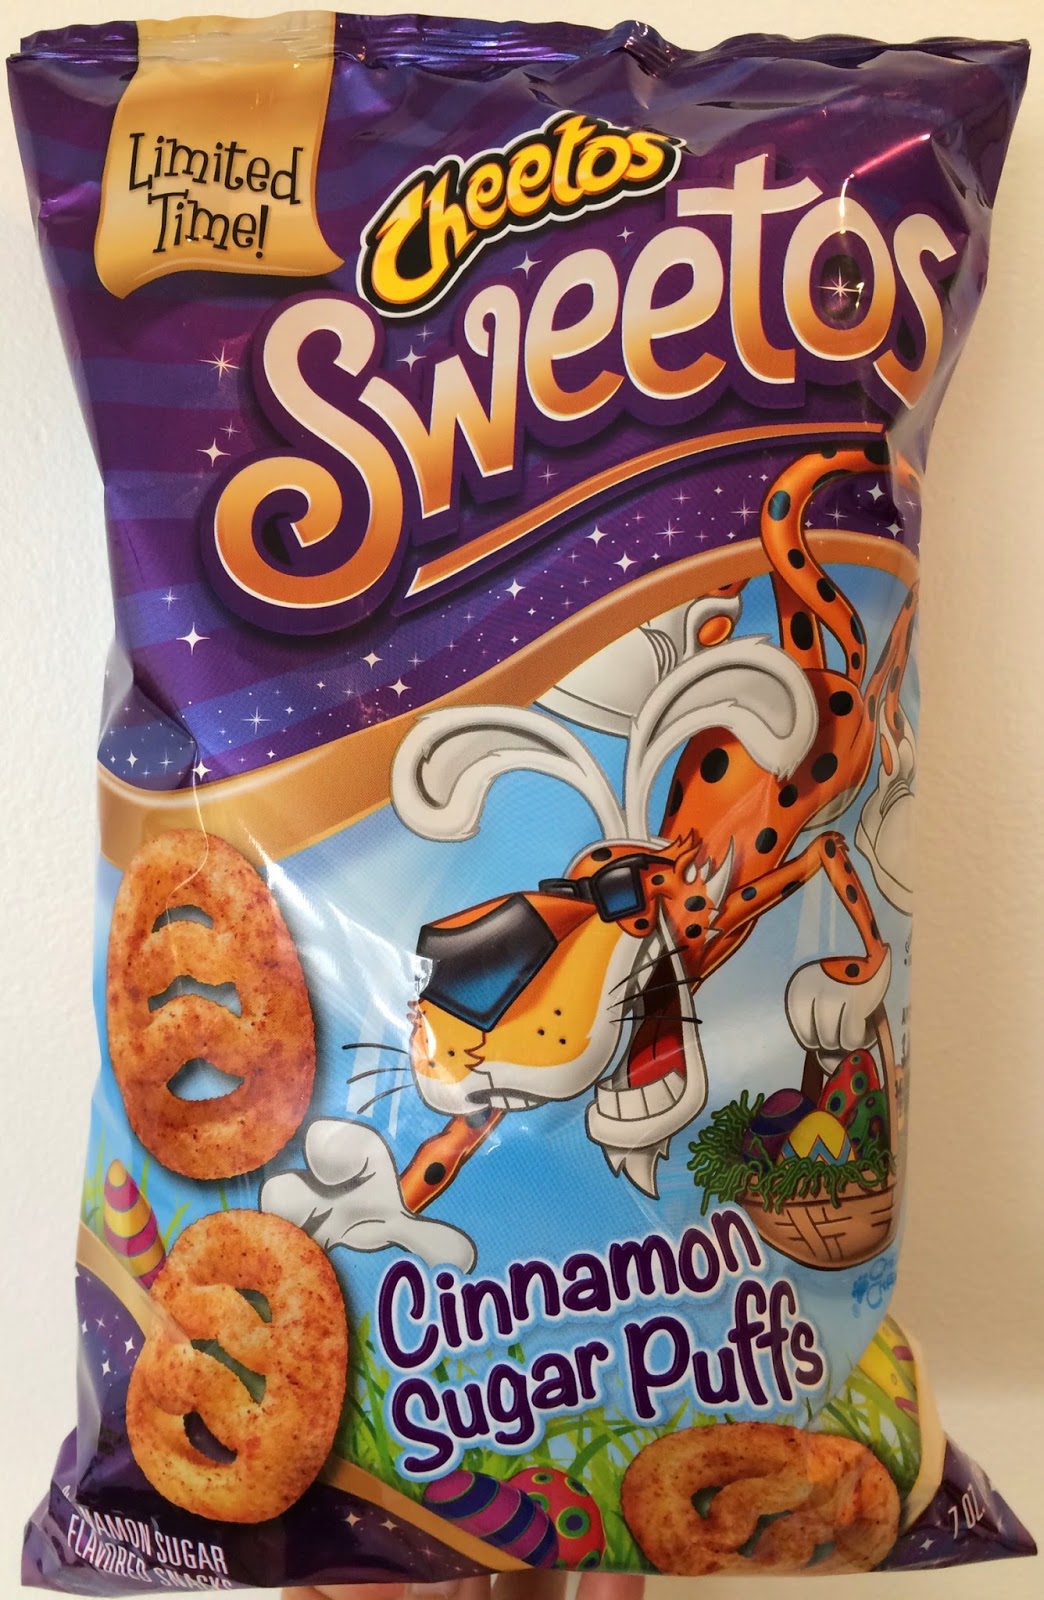 Cheetos Sweetos / チ-ト ス ス イ-ト ス.